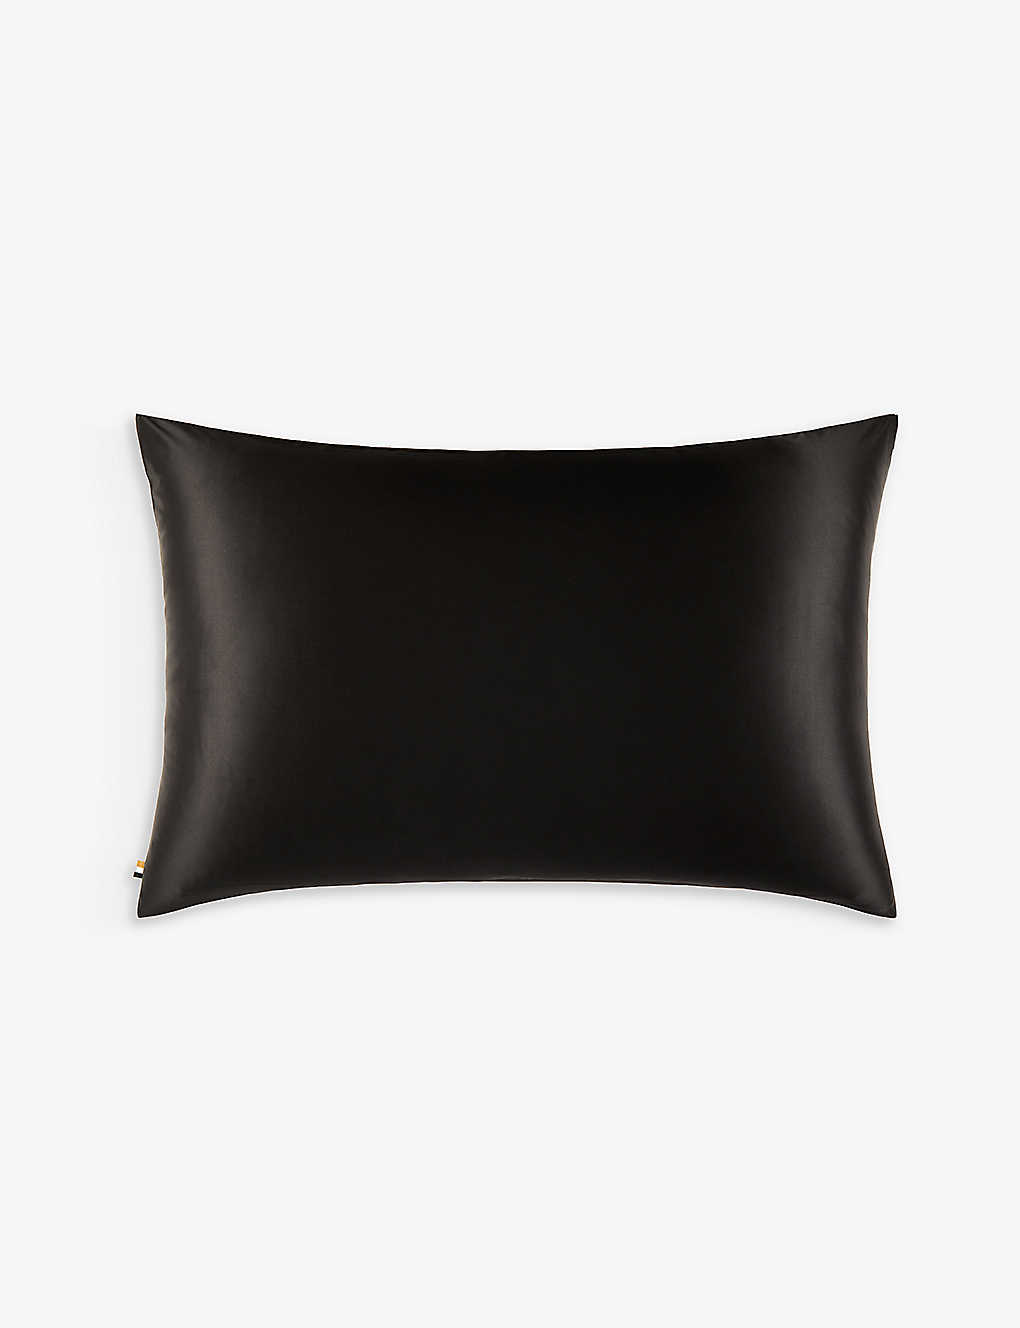 Hugo Boss Boss Black Sham Standard Silk Pillowcase